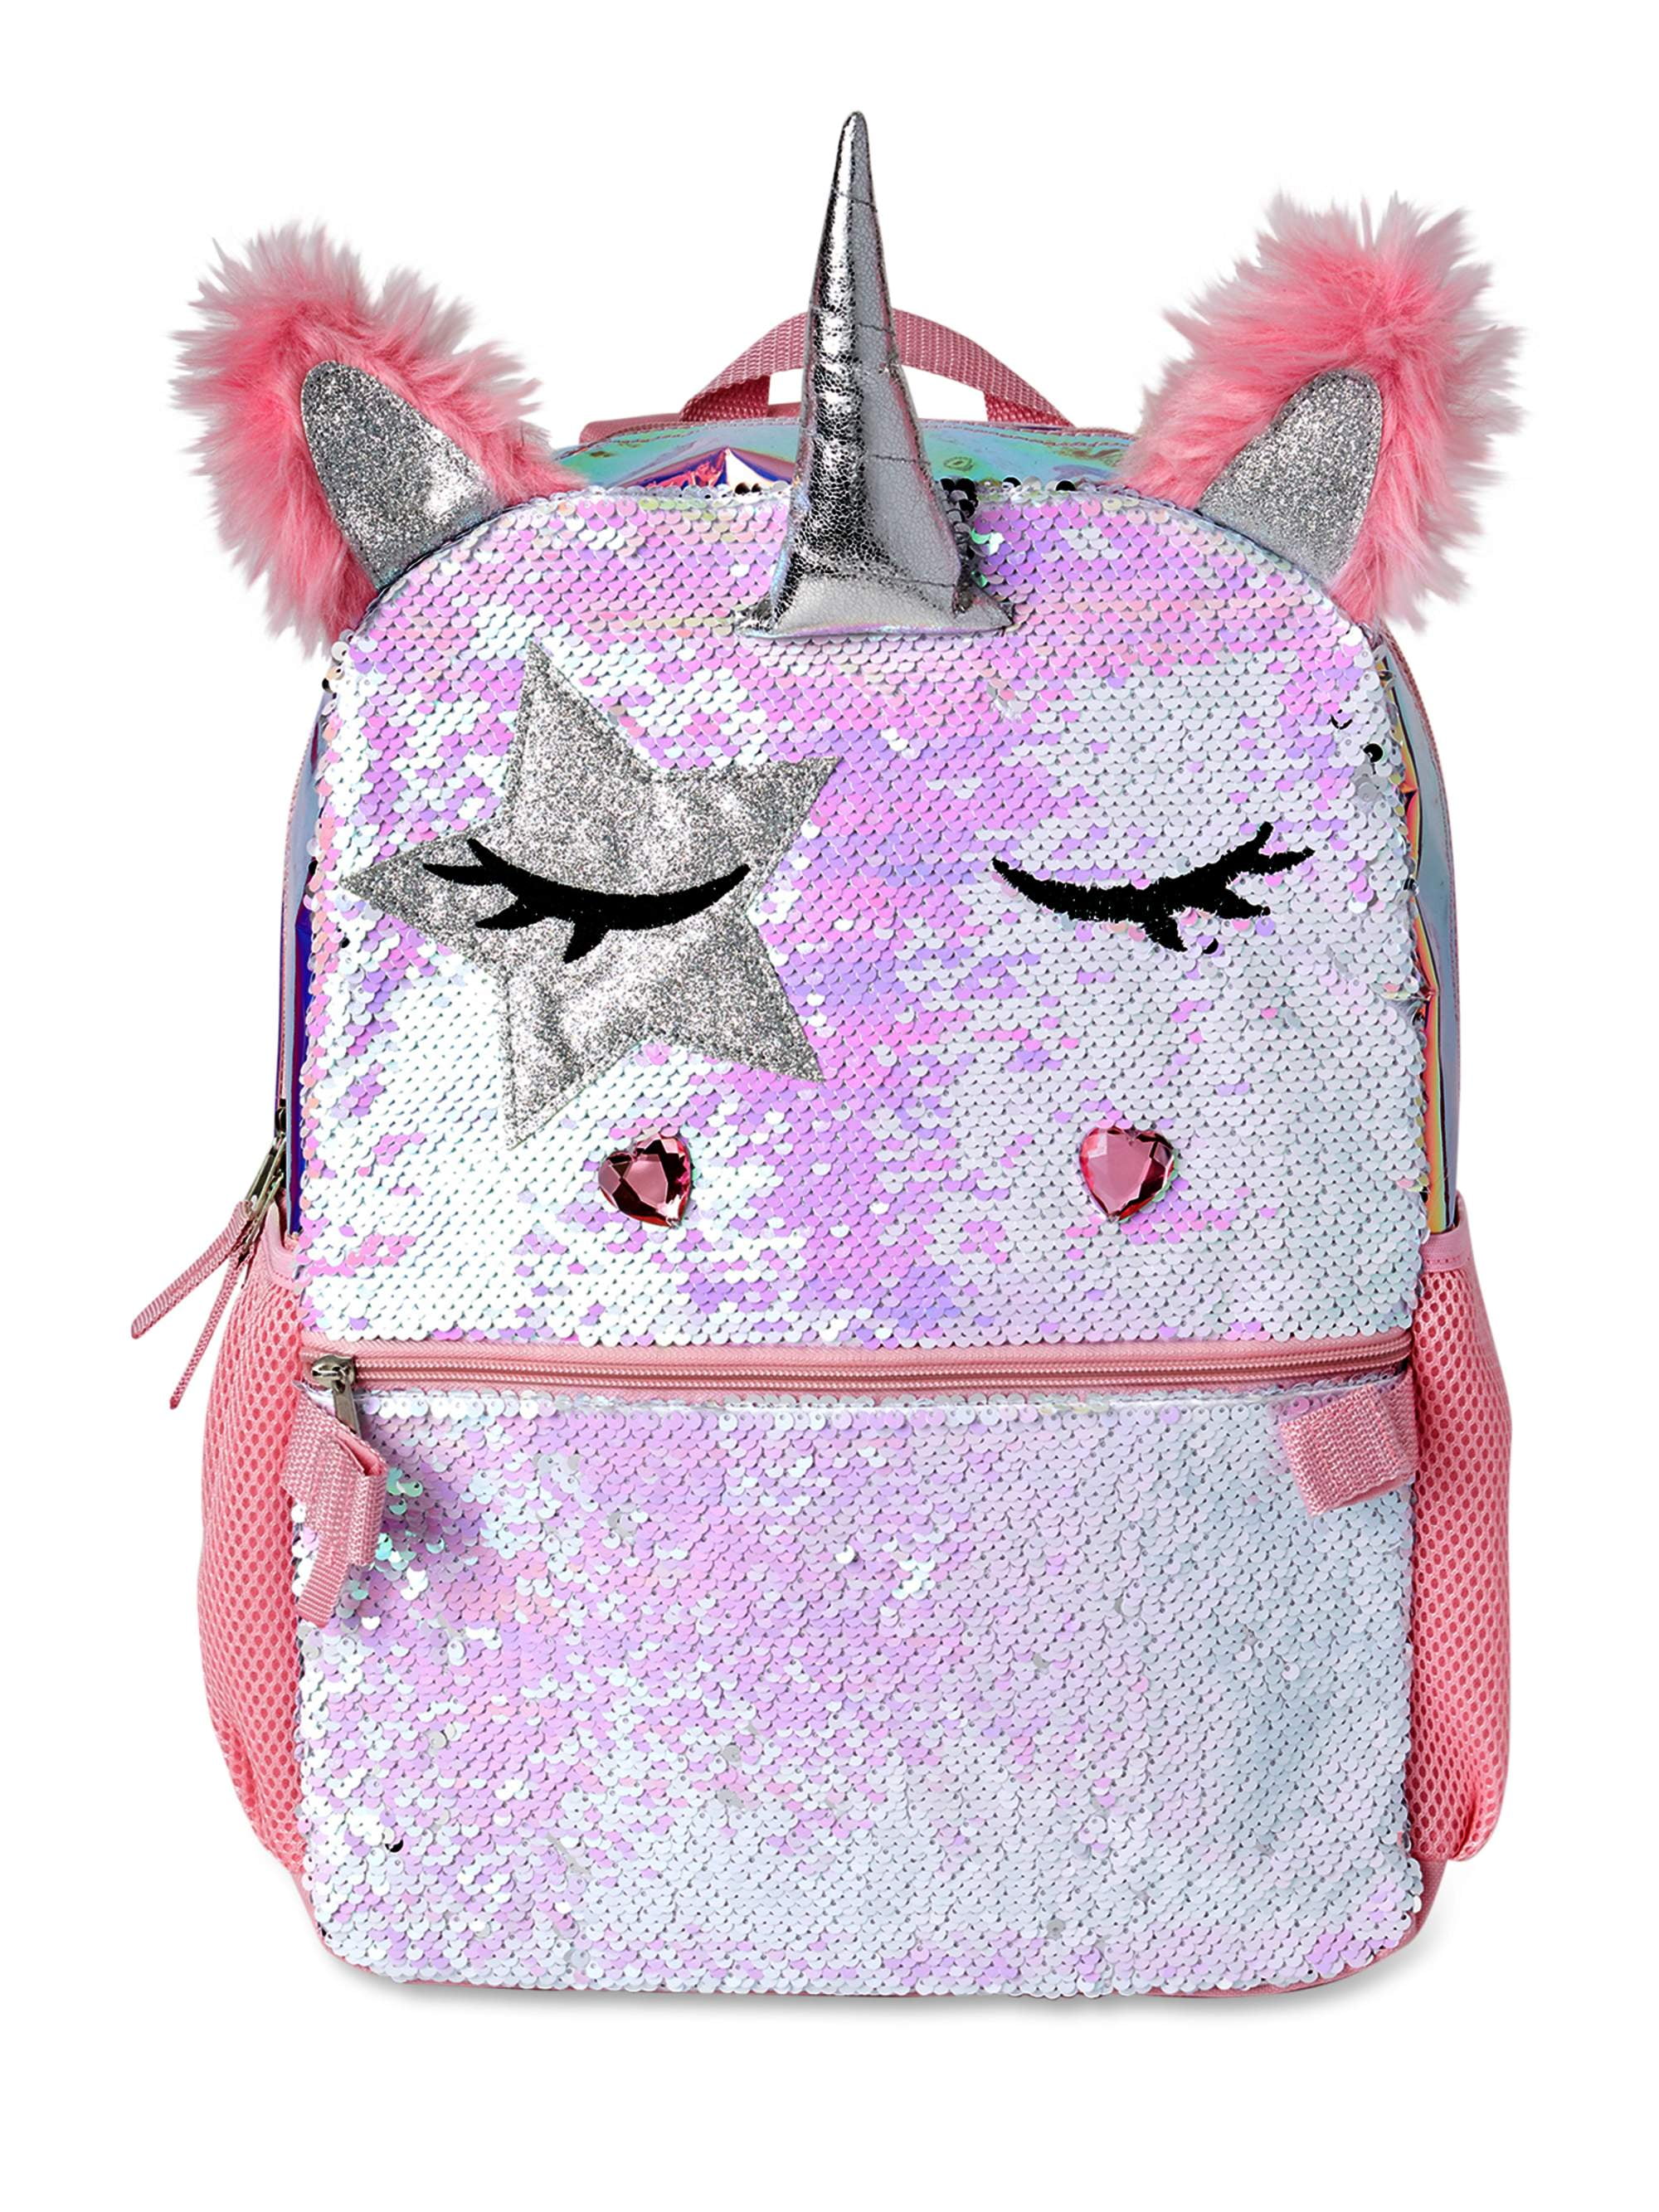 Unicorn Backpack Bag Purse School Colorful Plush Hot Pink Purple Green White 